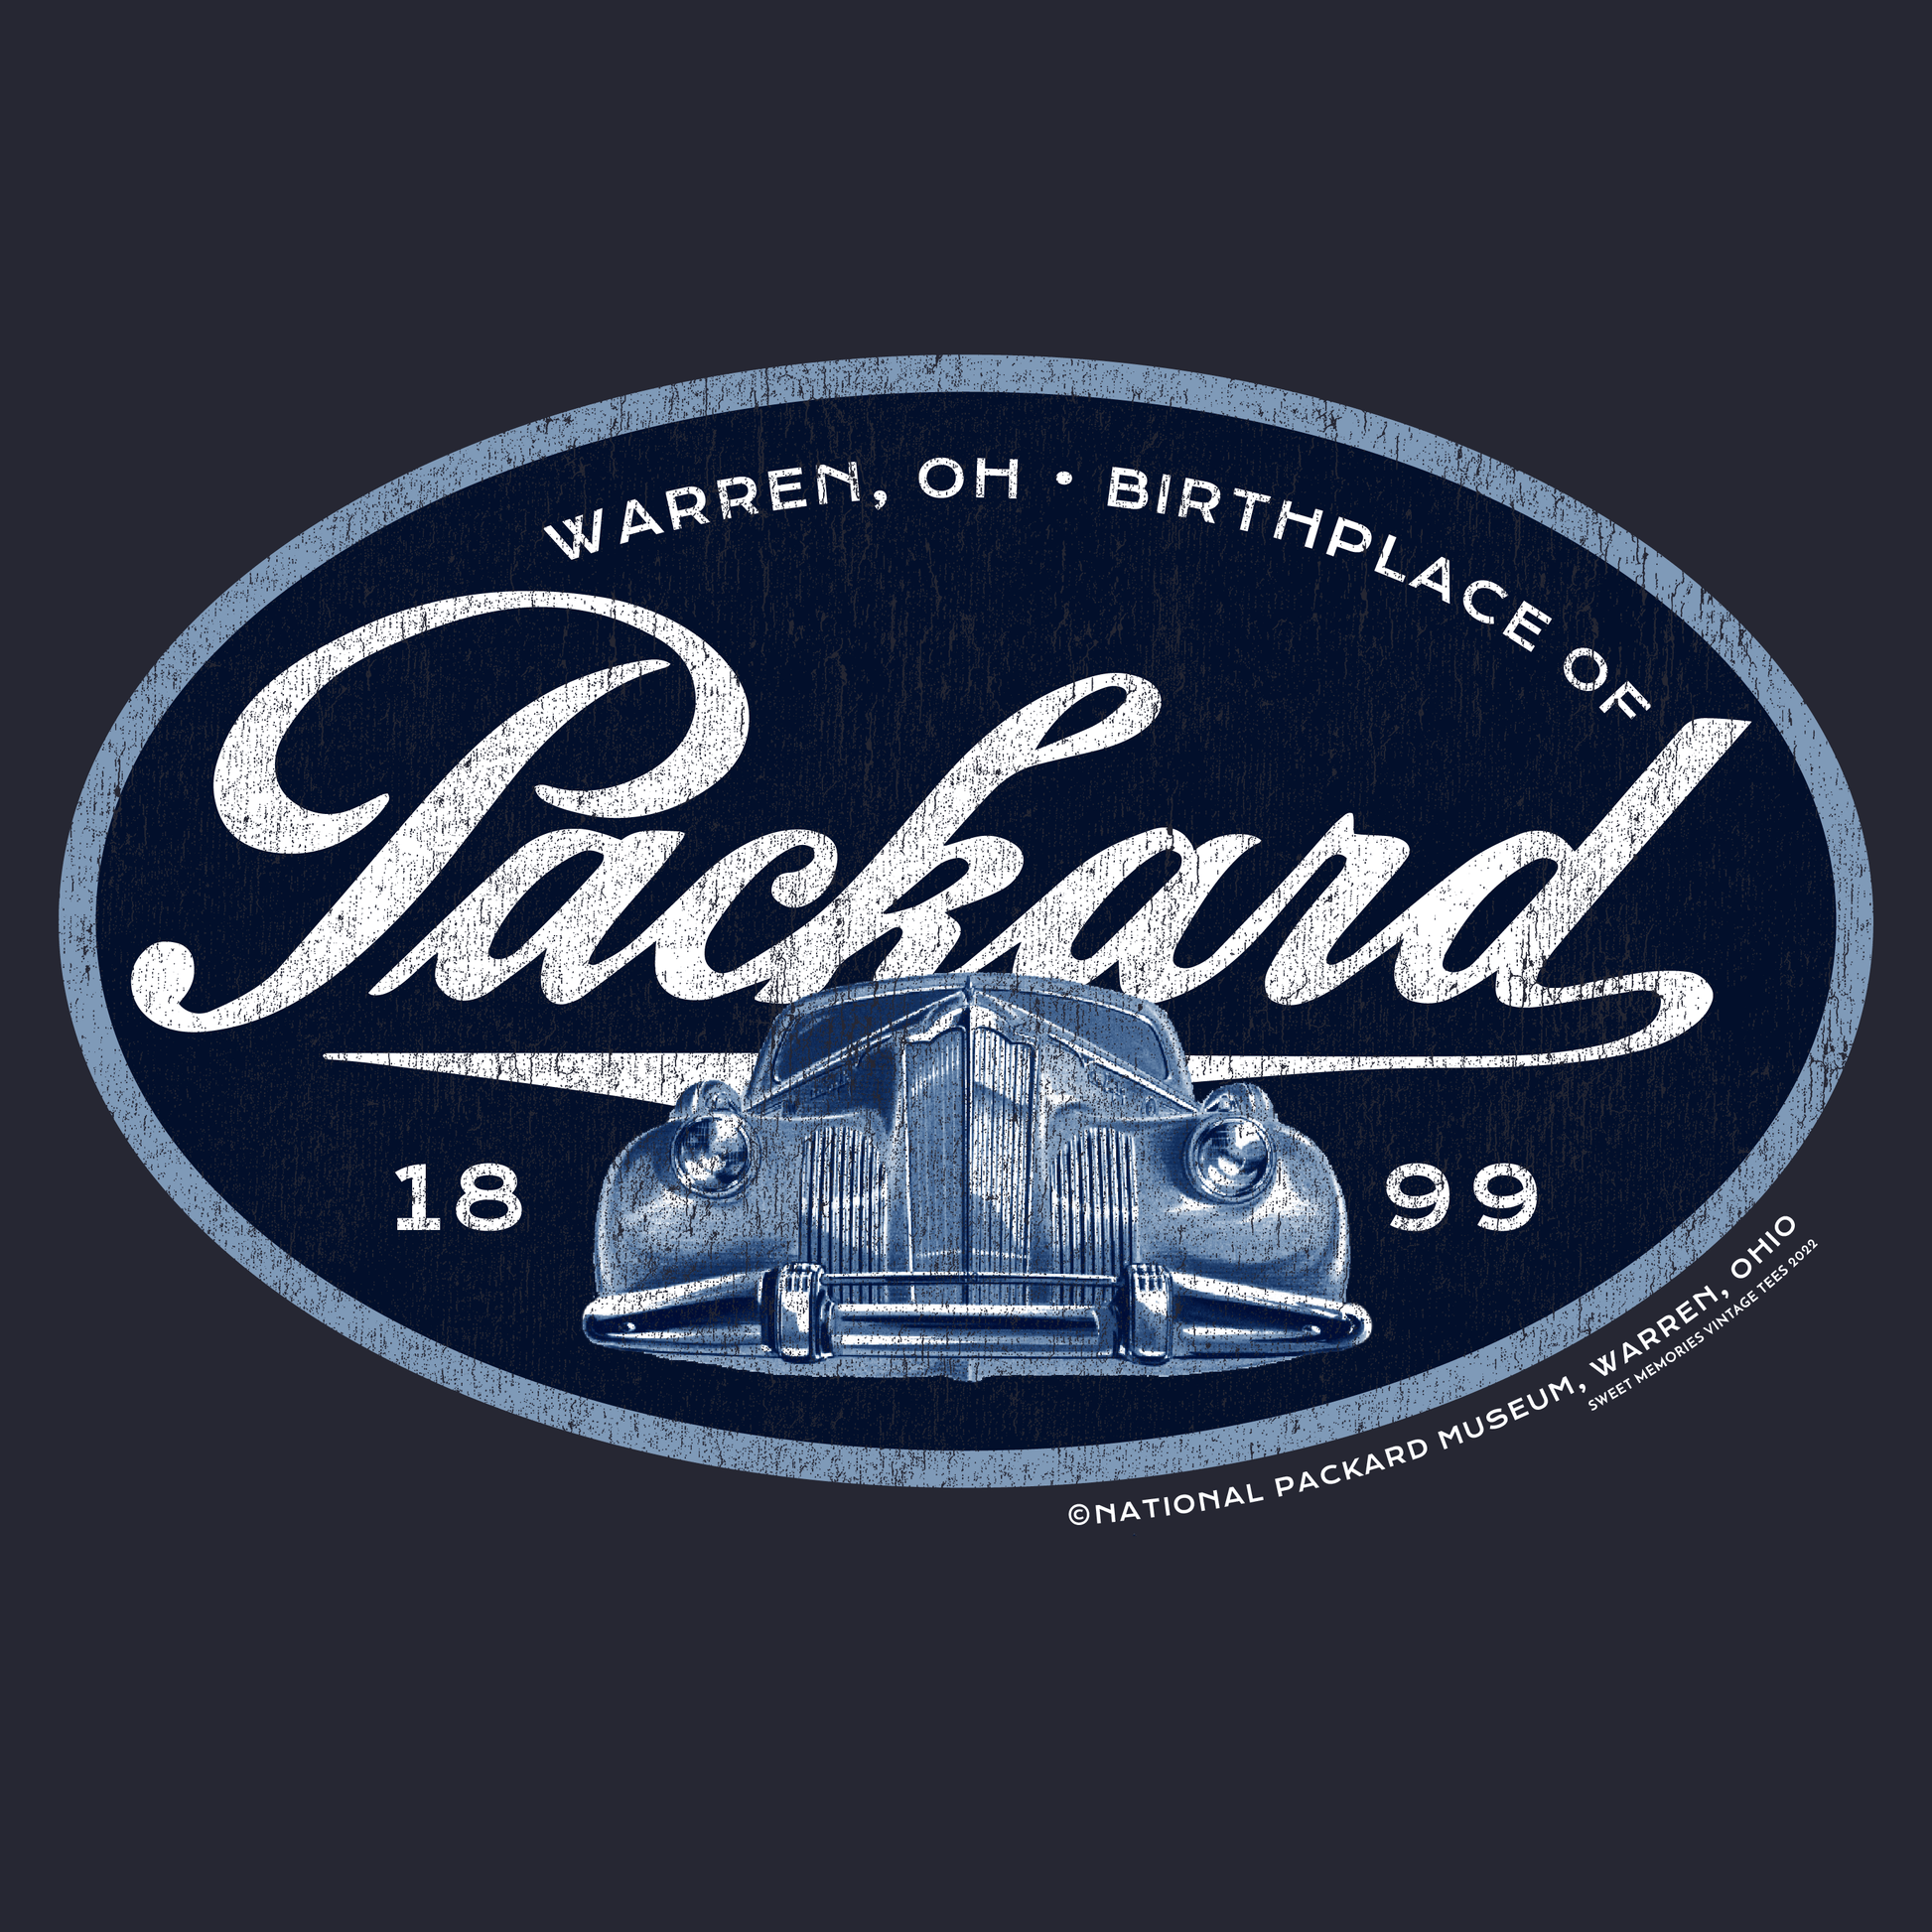 packard car logo